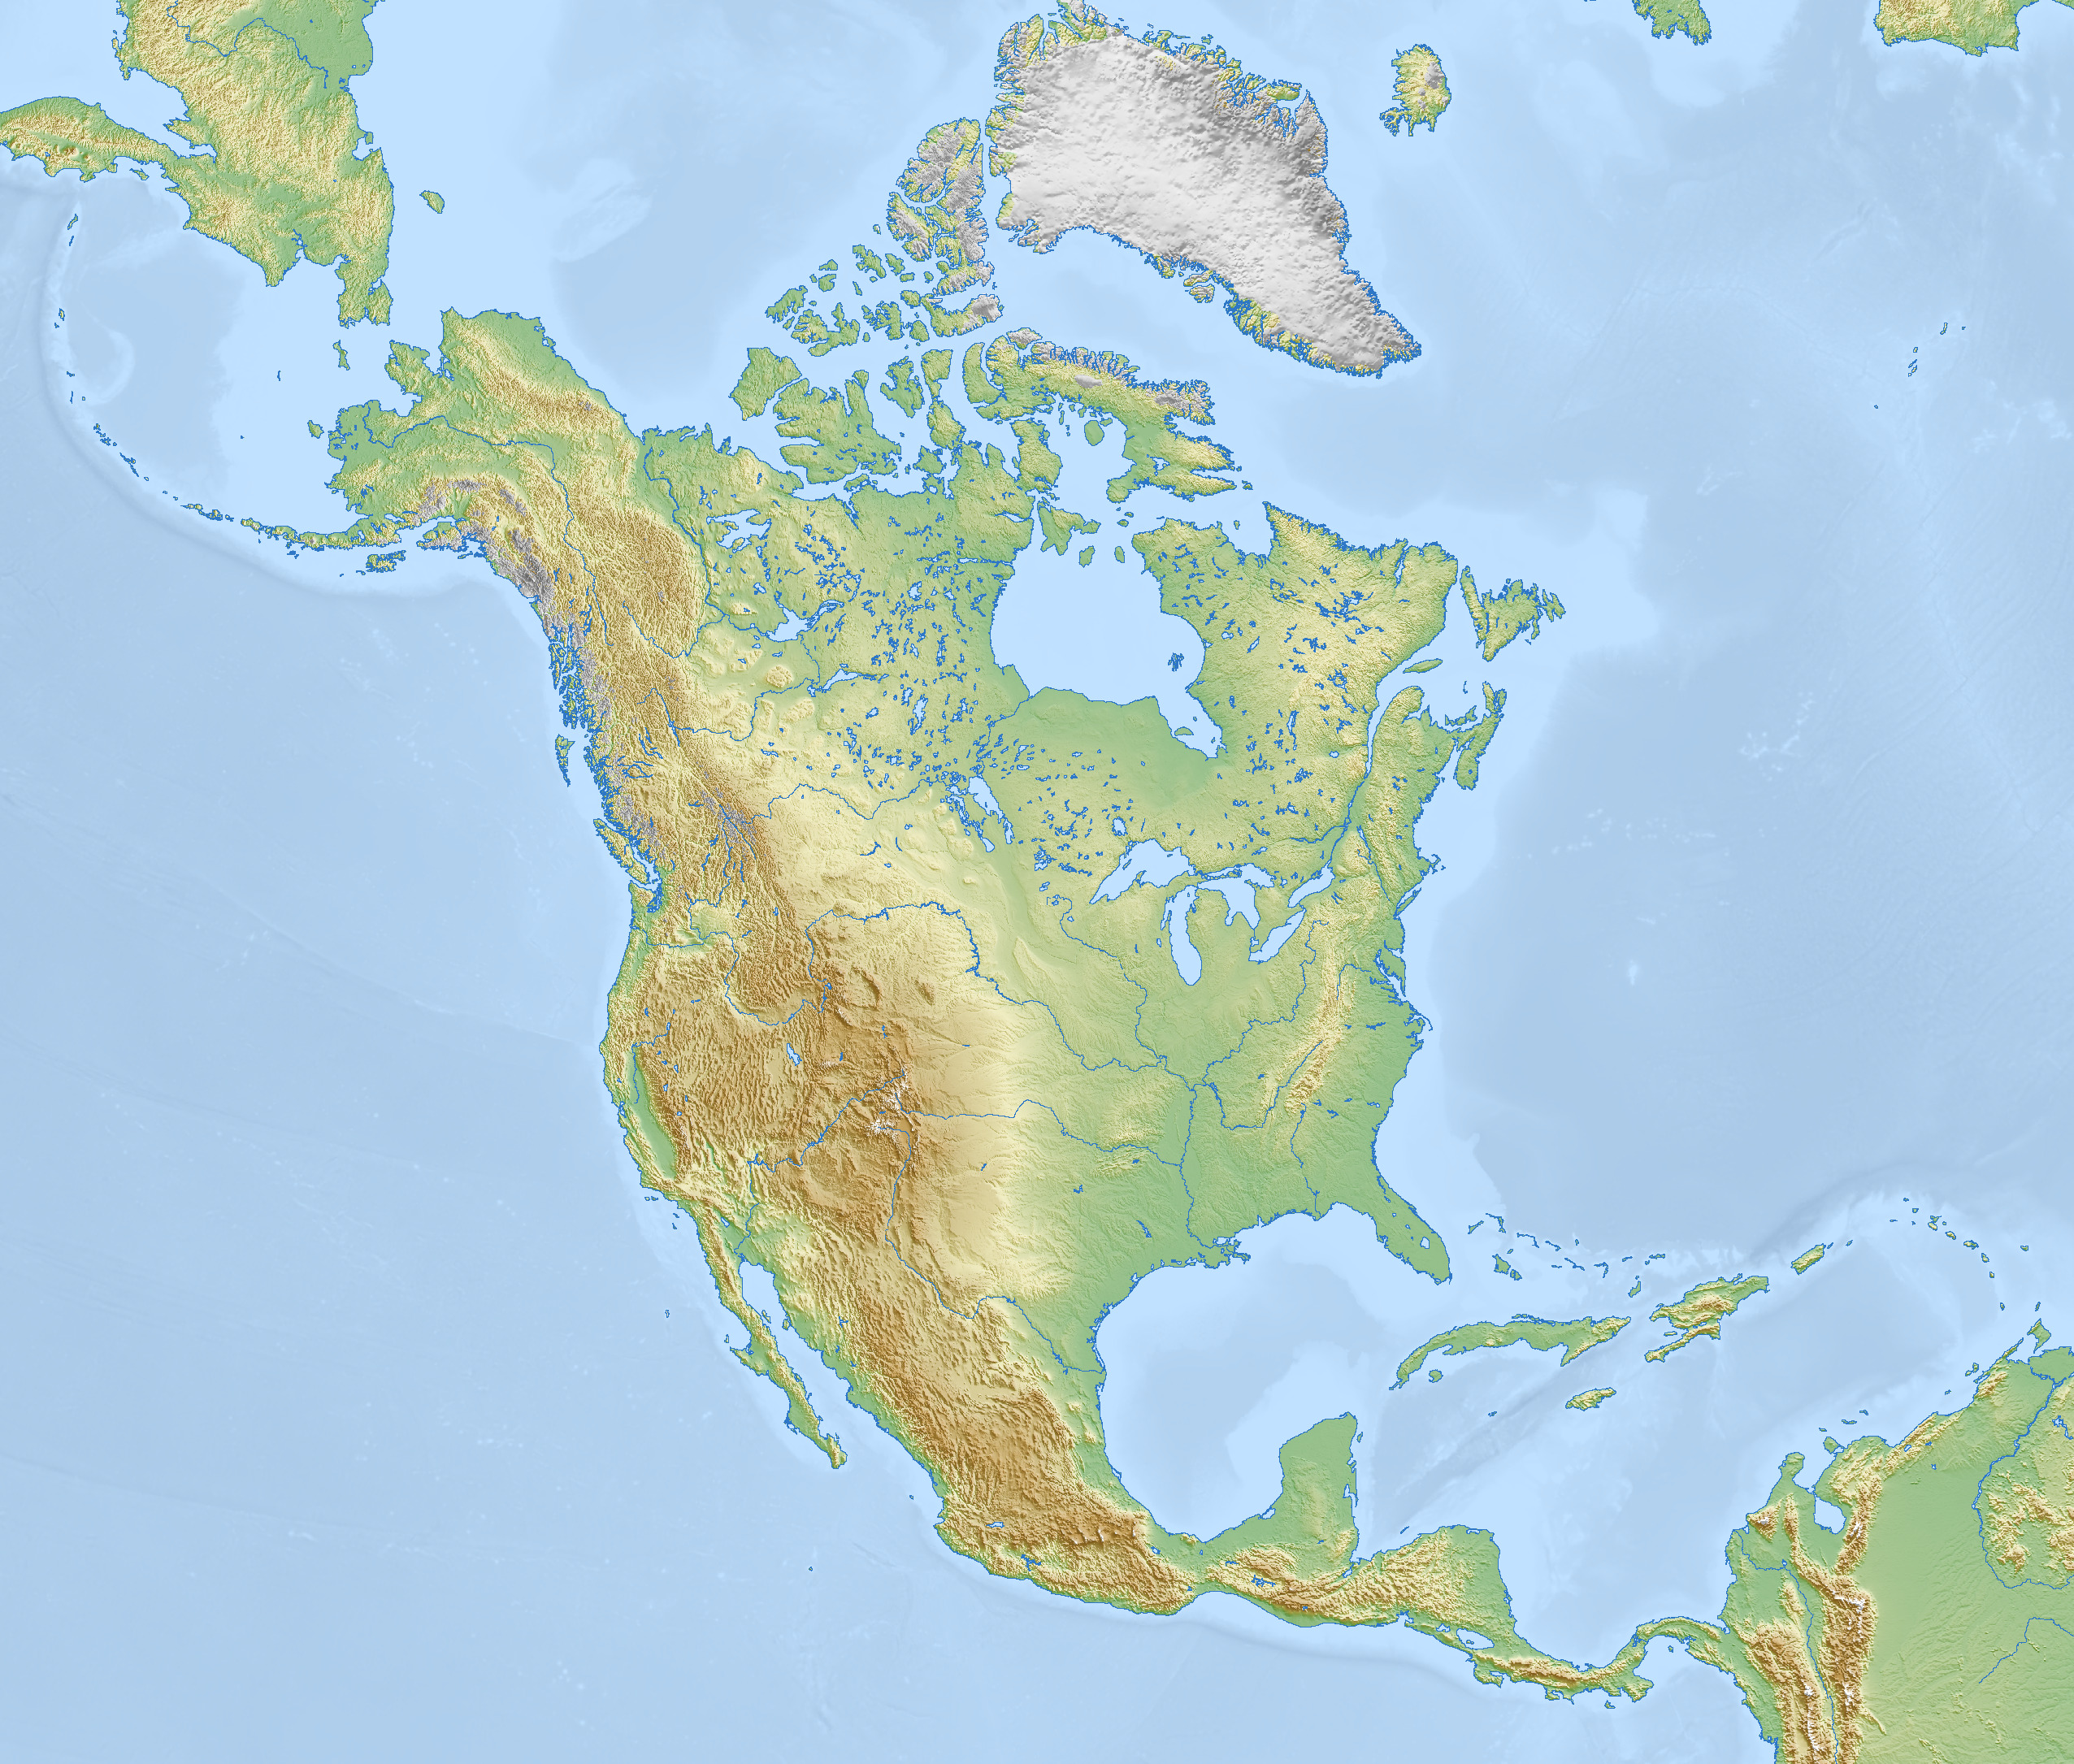 America :: Maps :: America :: North America 